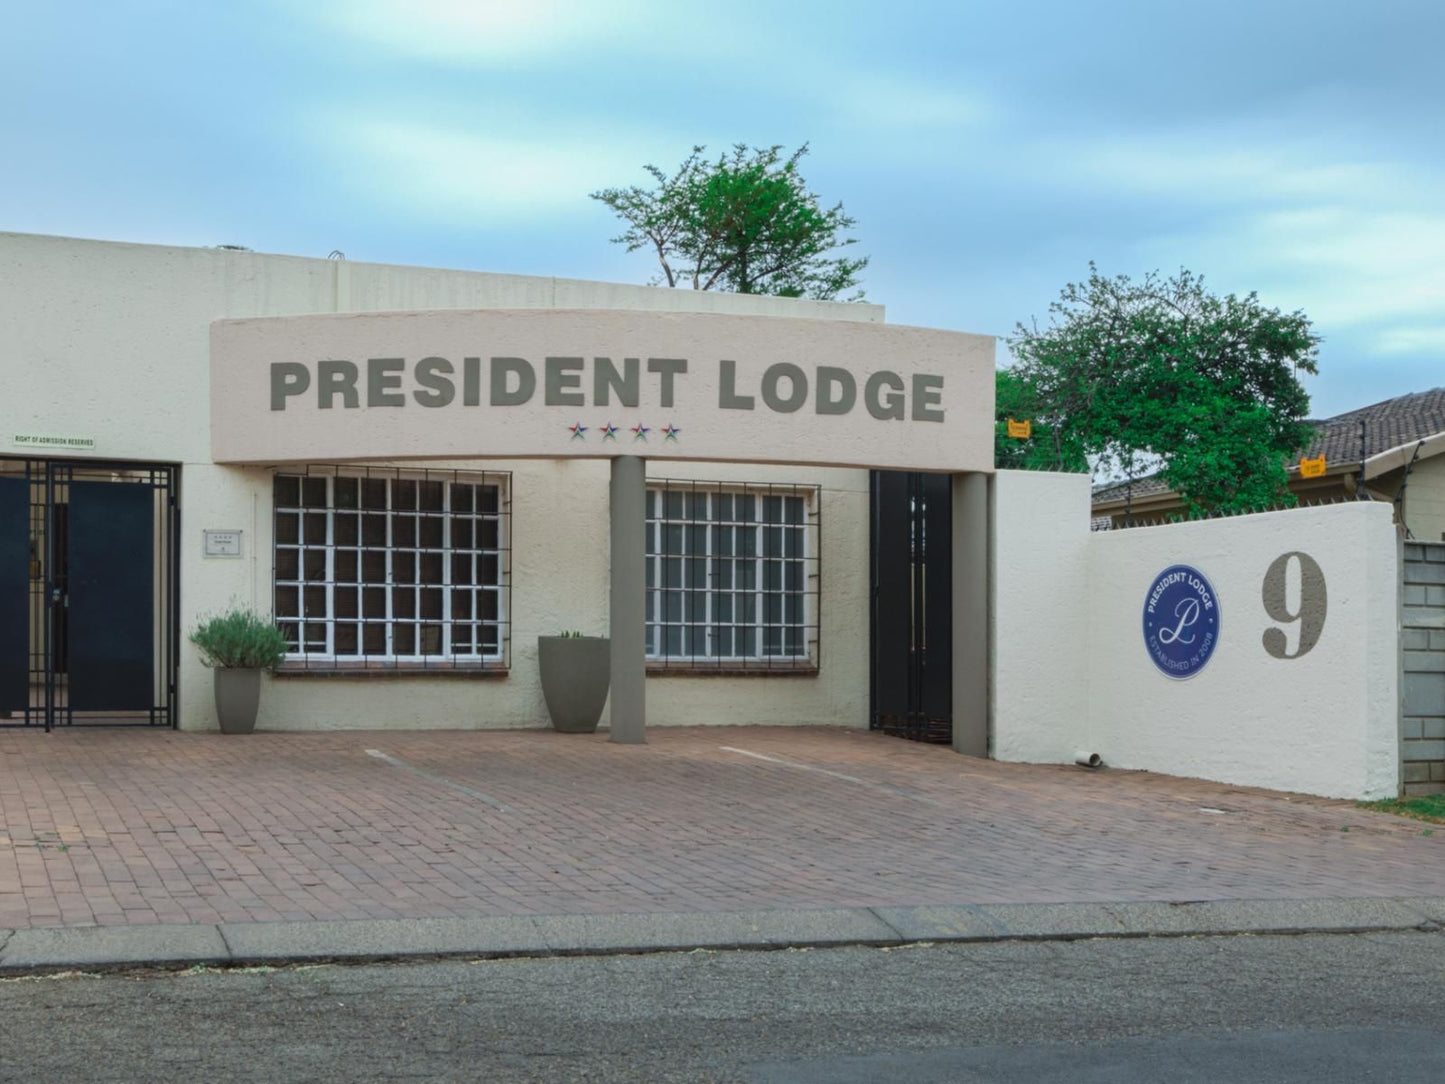 President Lodge Edenvale Johannesburg Gauteng South Africa Sign